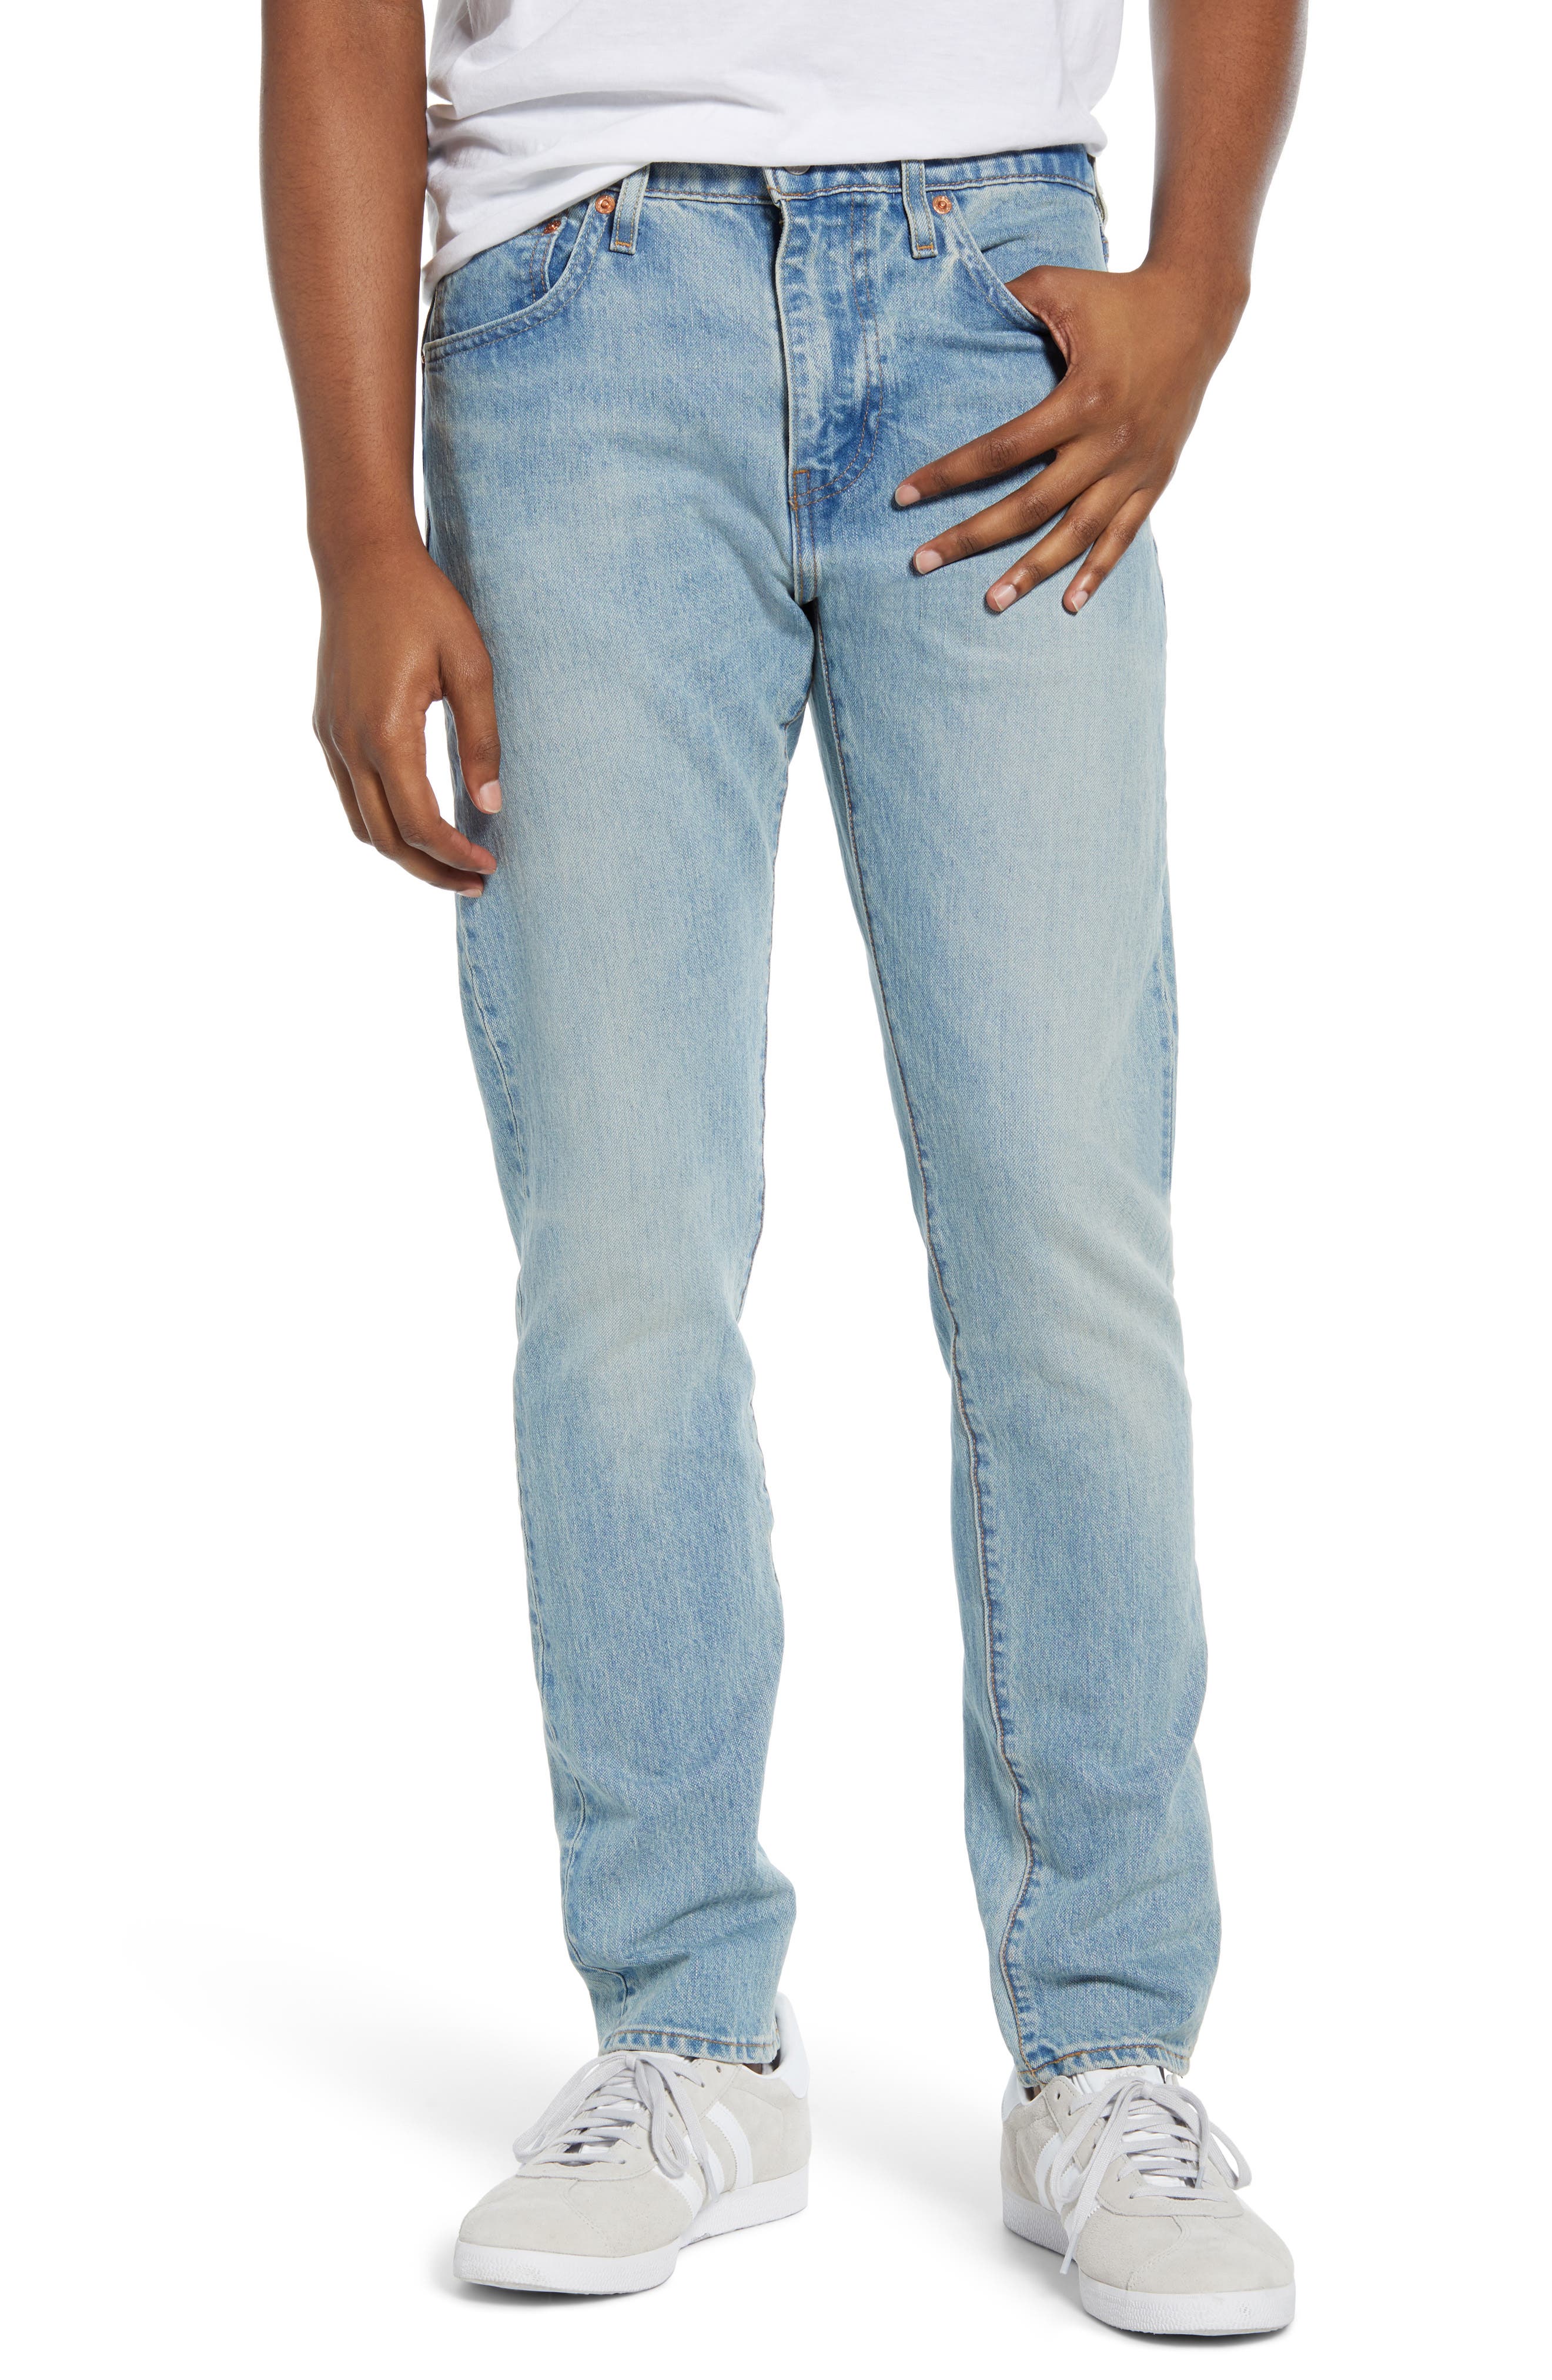 levis jeans 512 price